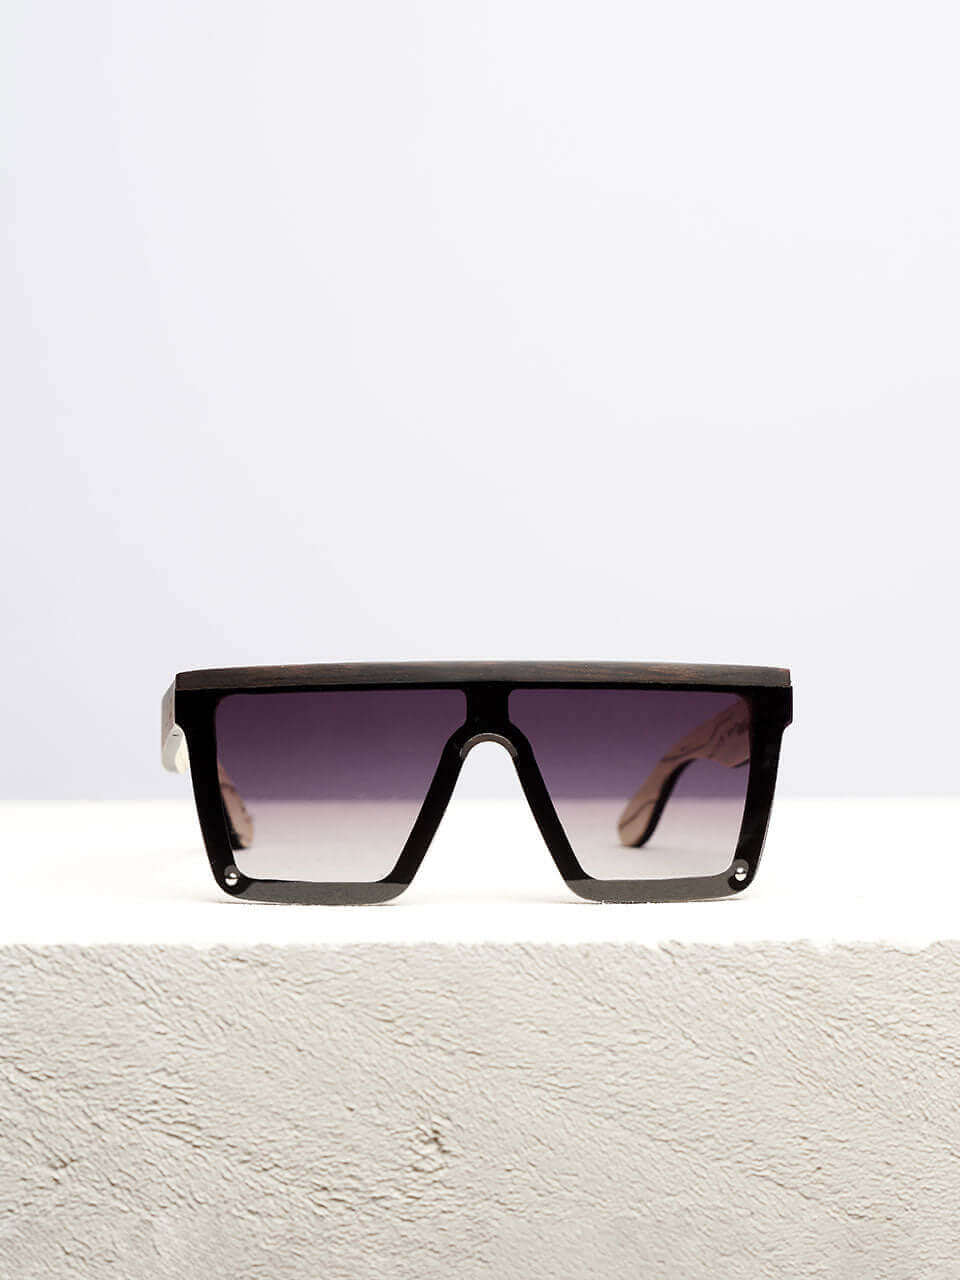 Poker Face – Wooden Sunglasses for Men and Women